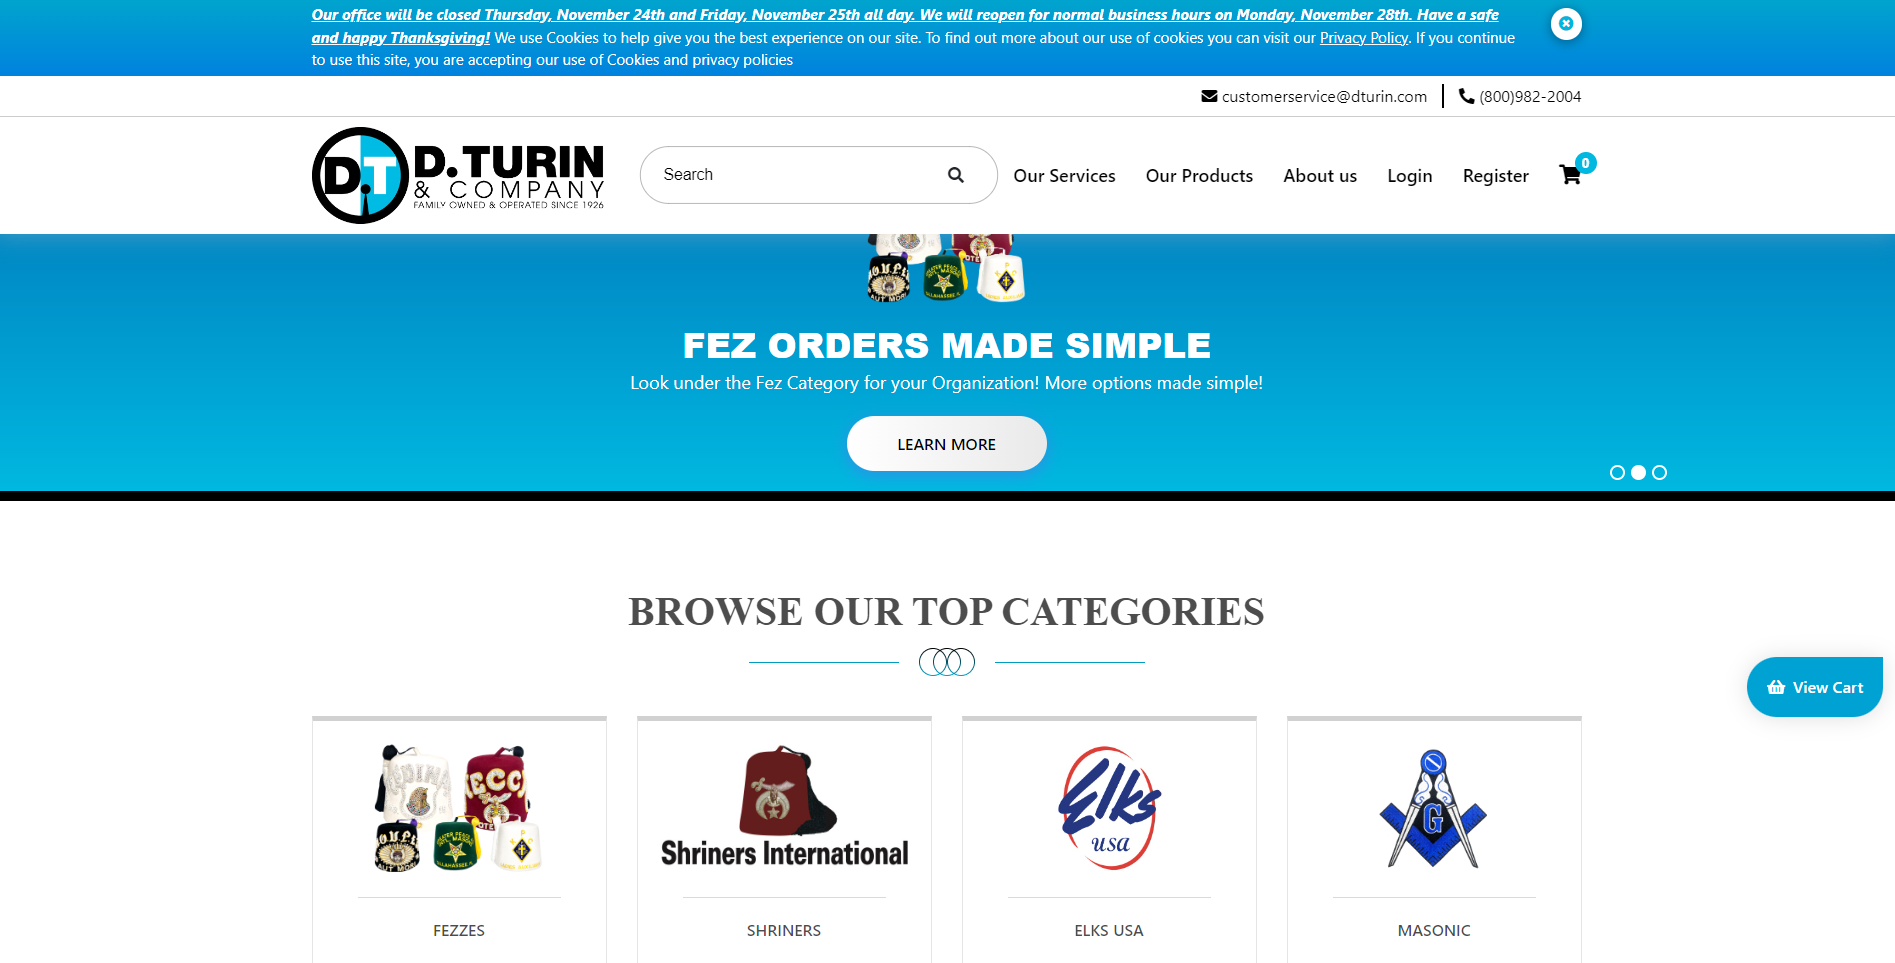 Web Design for D. Turin & Company